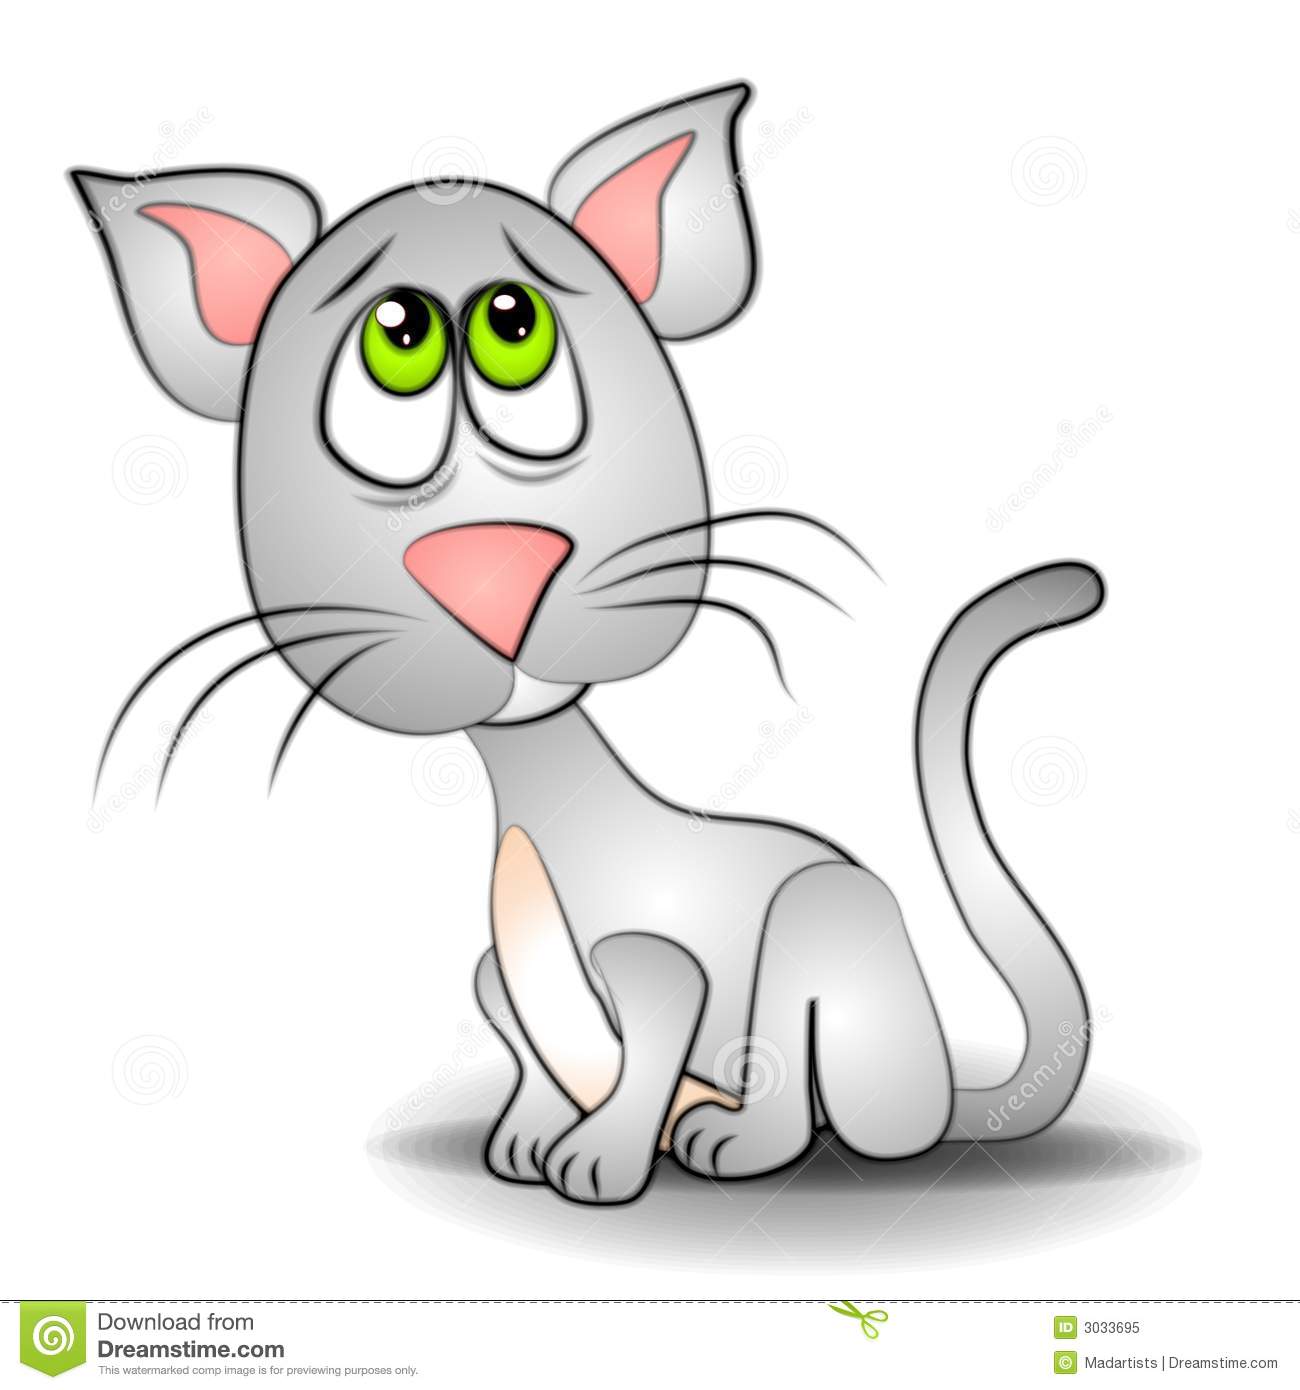 Sad Eyes Cat Kitten Clip Art Royalty Free Stock Photo   Image  3033695